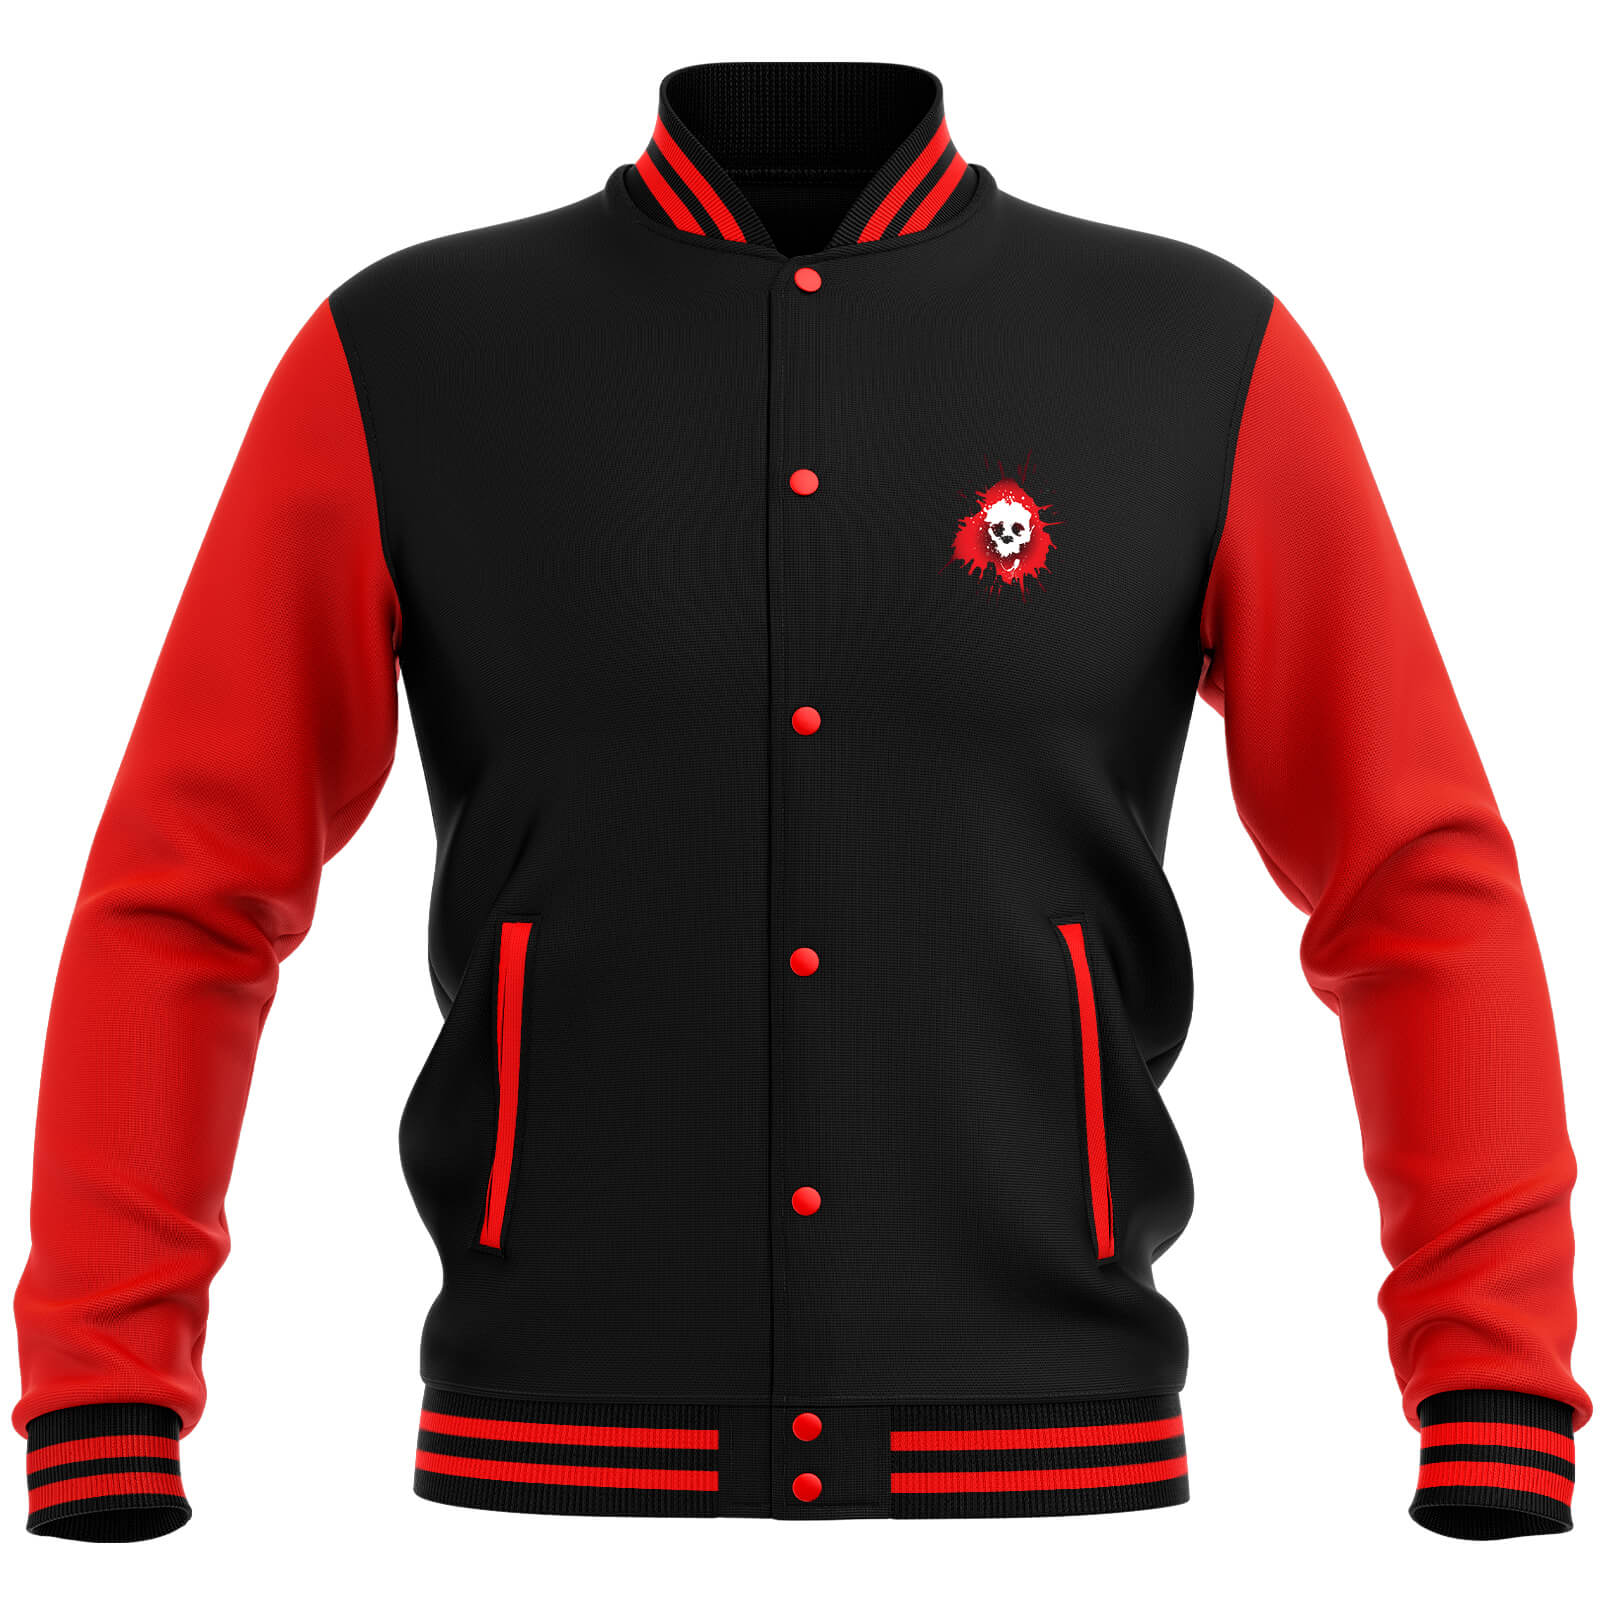 Skullsplat Varsity Jacket - Red/Black - M - Black